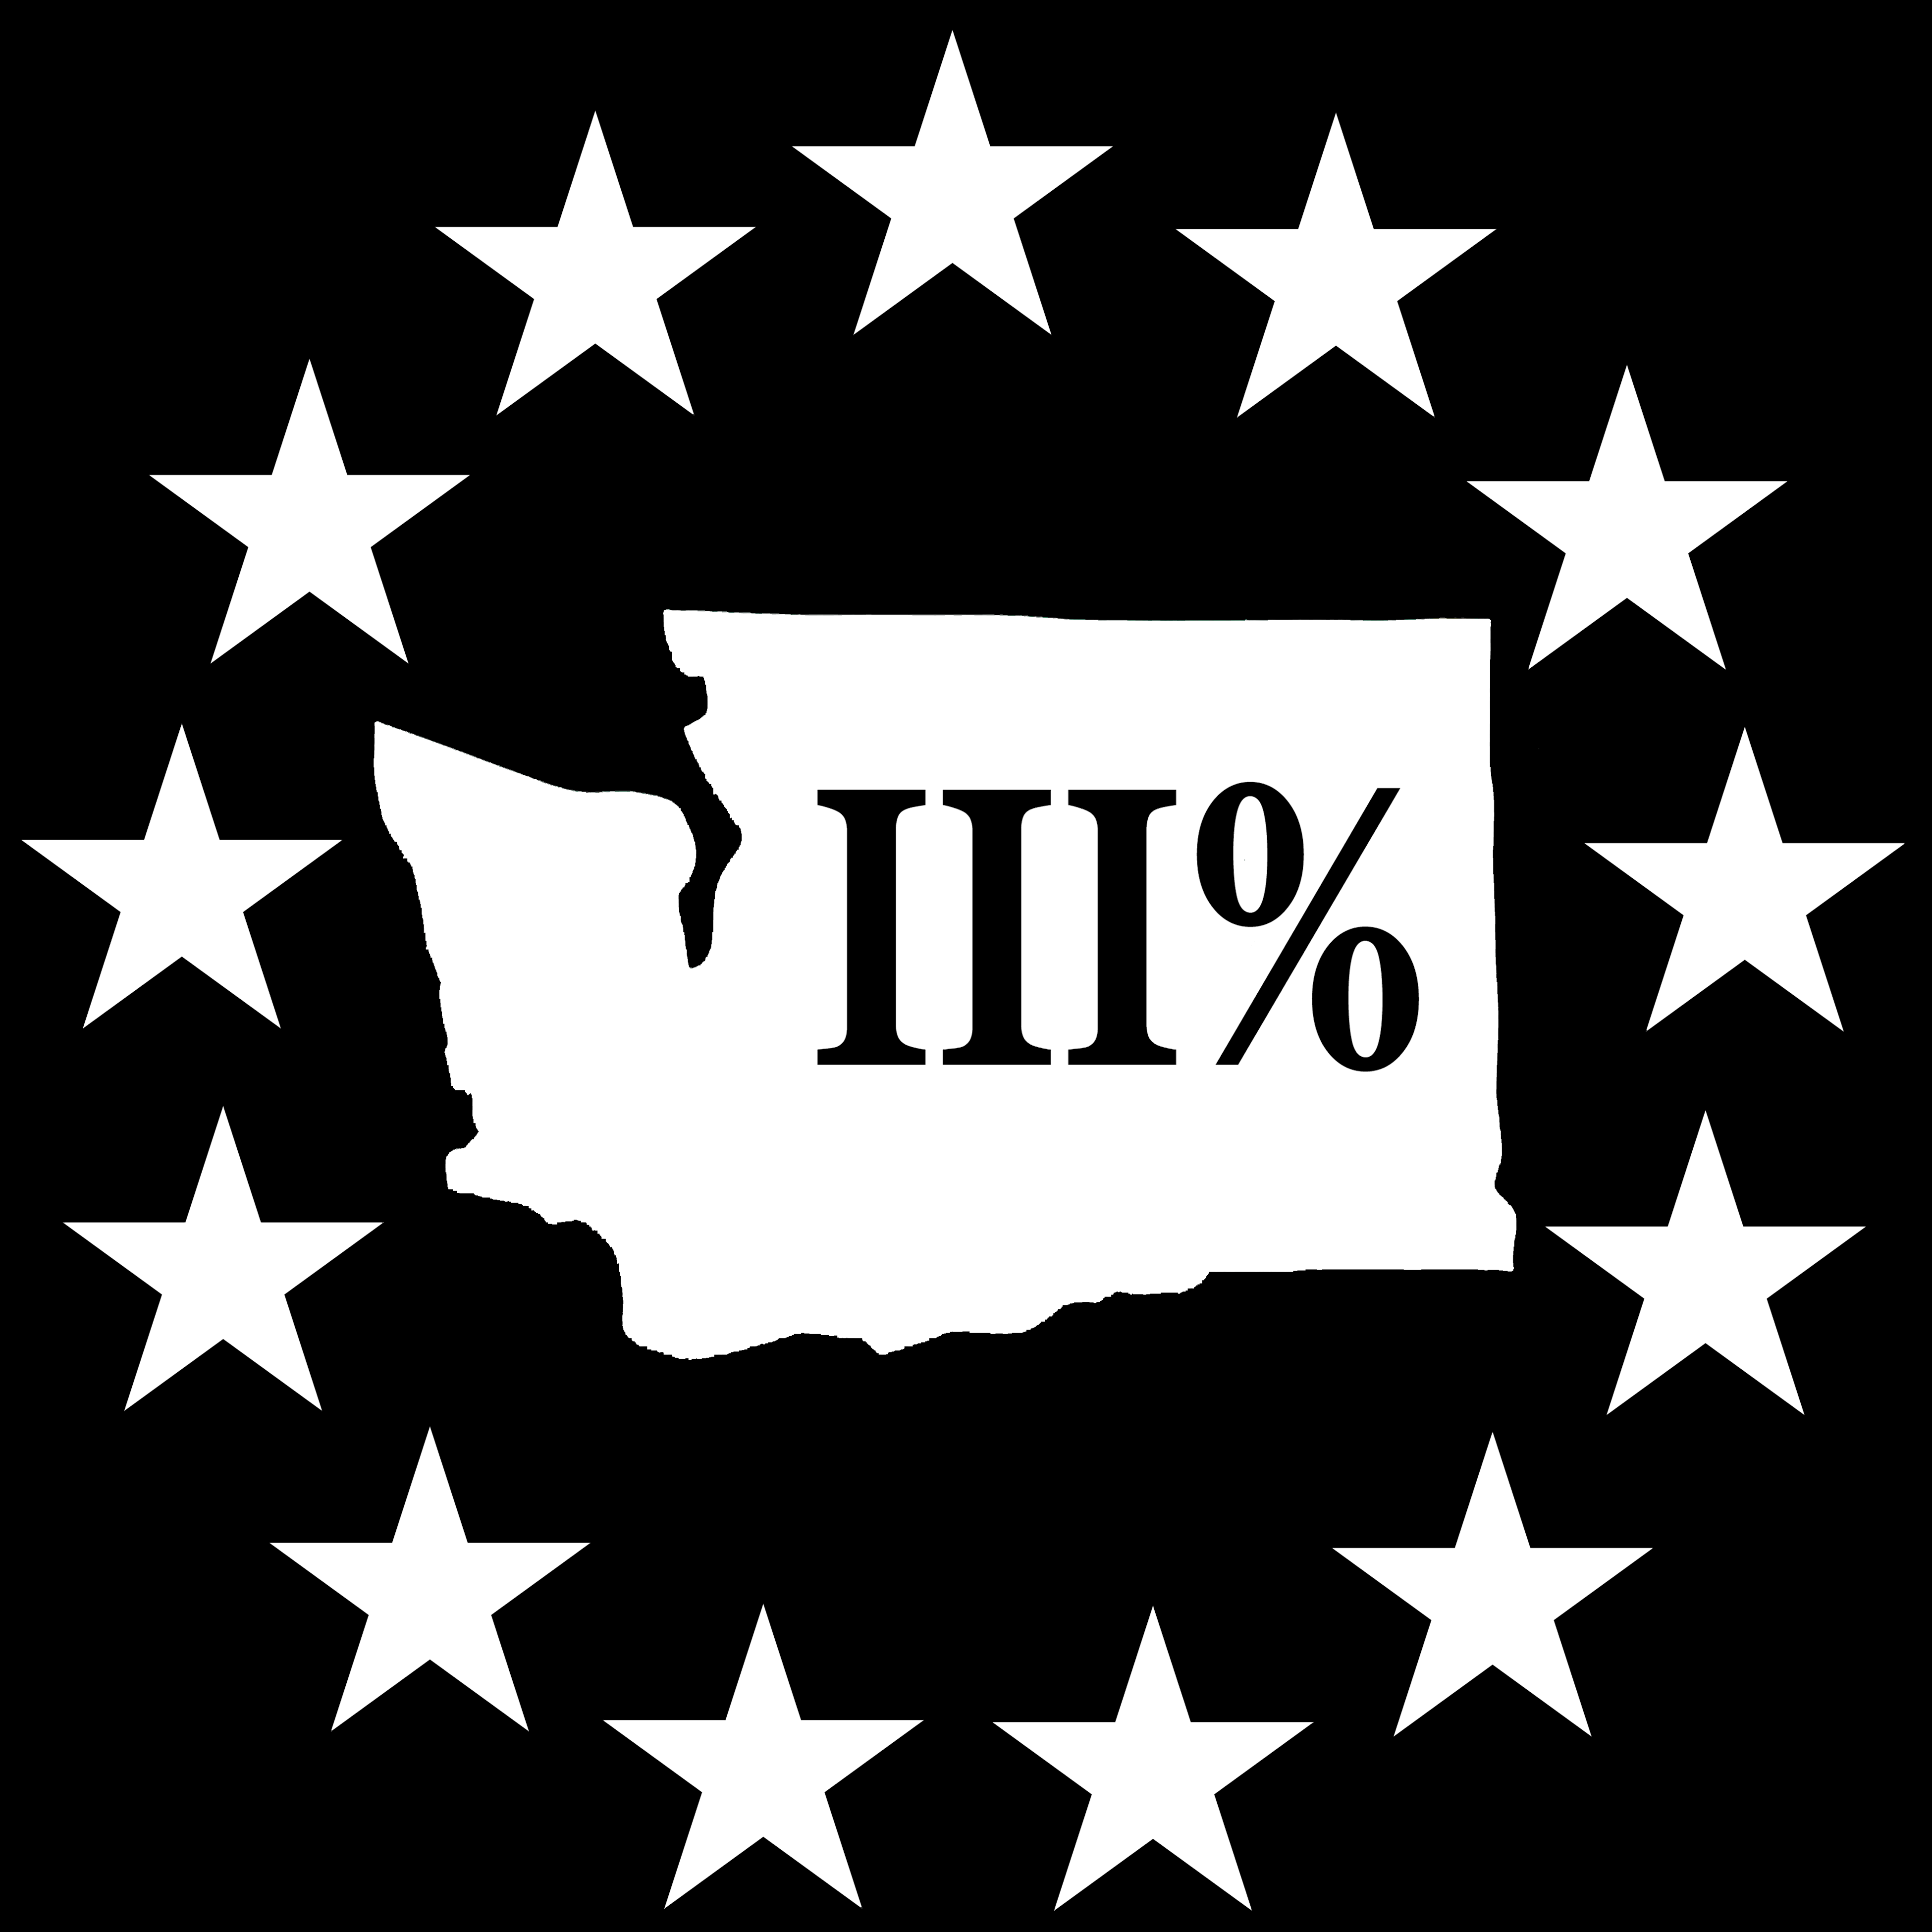 Three Percent of Washington